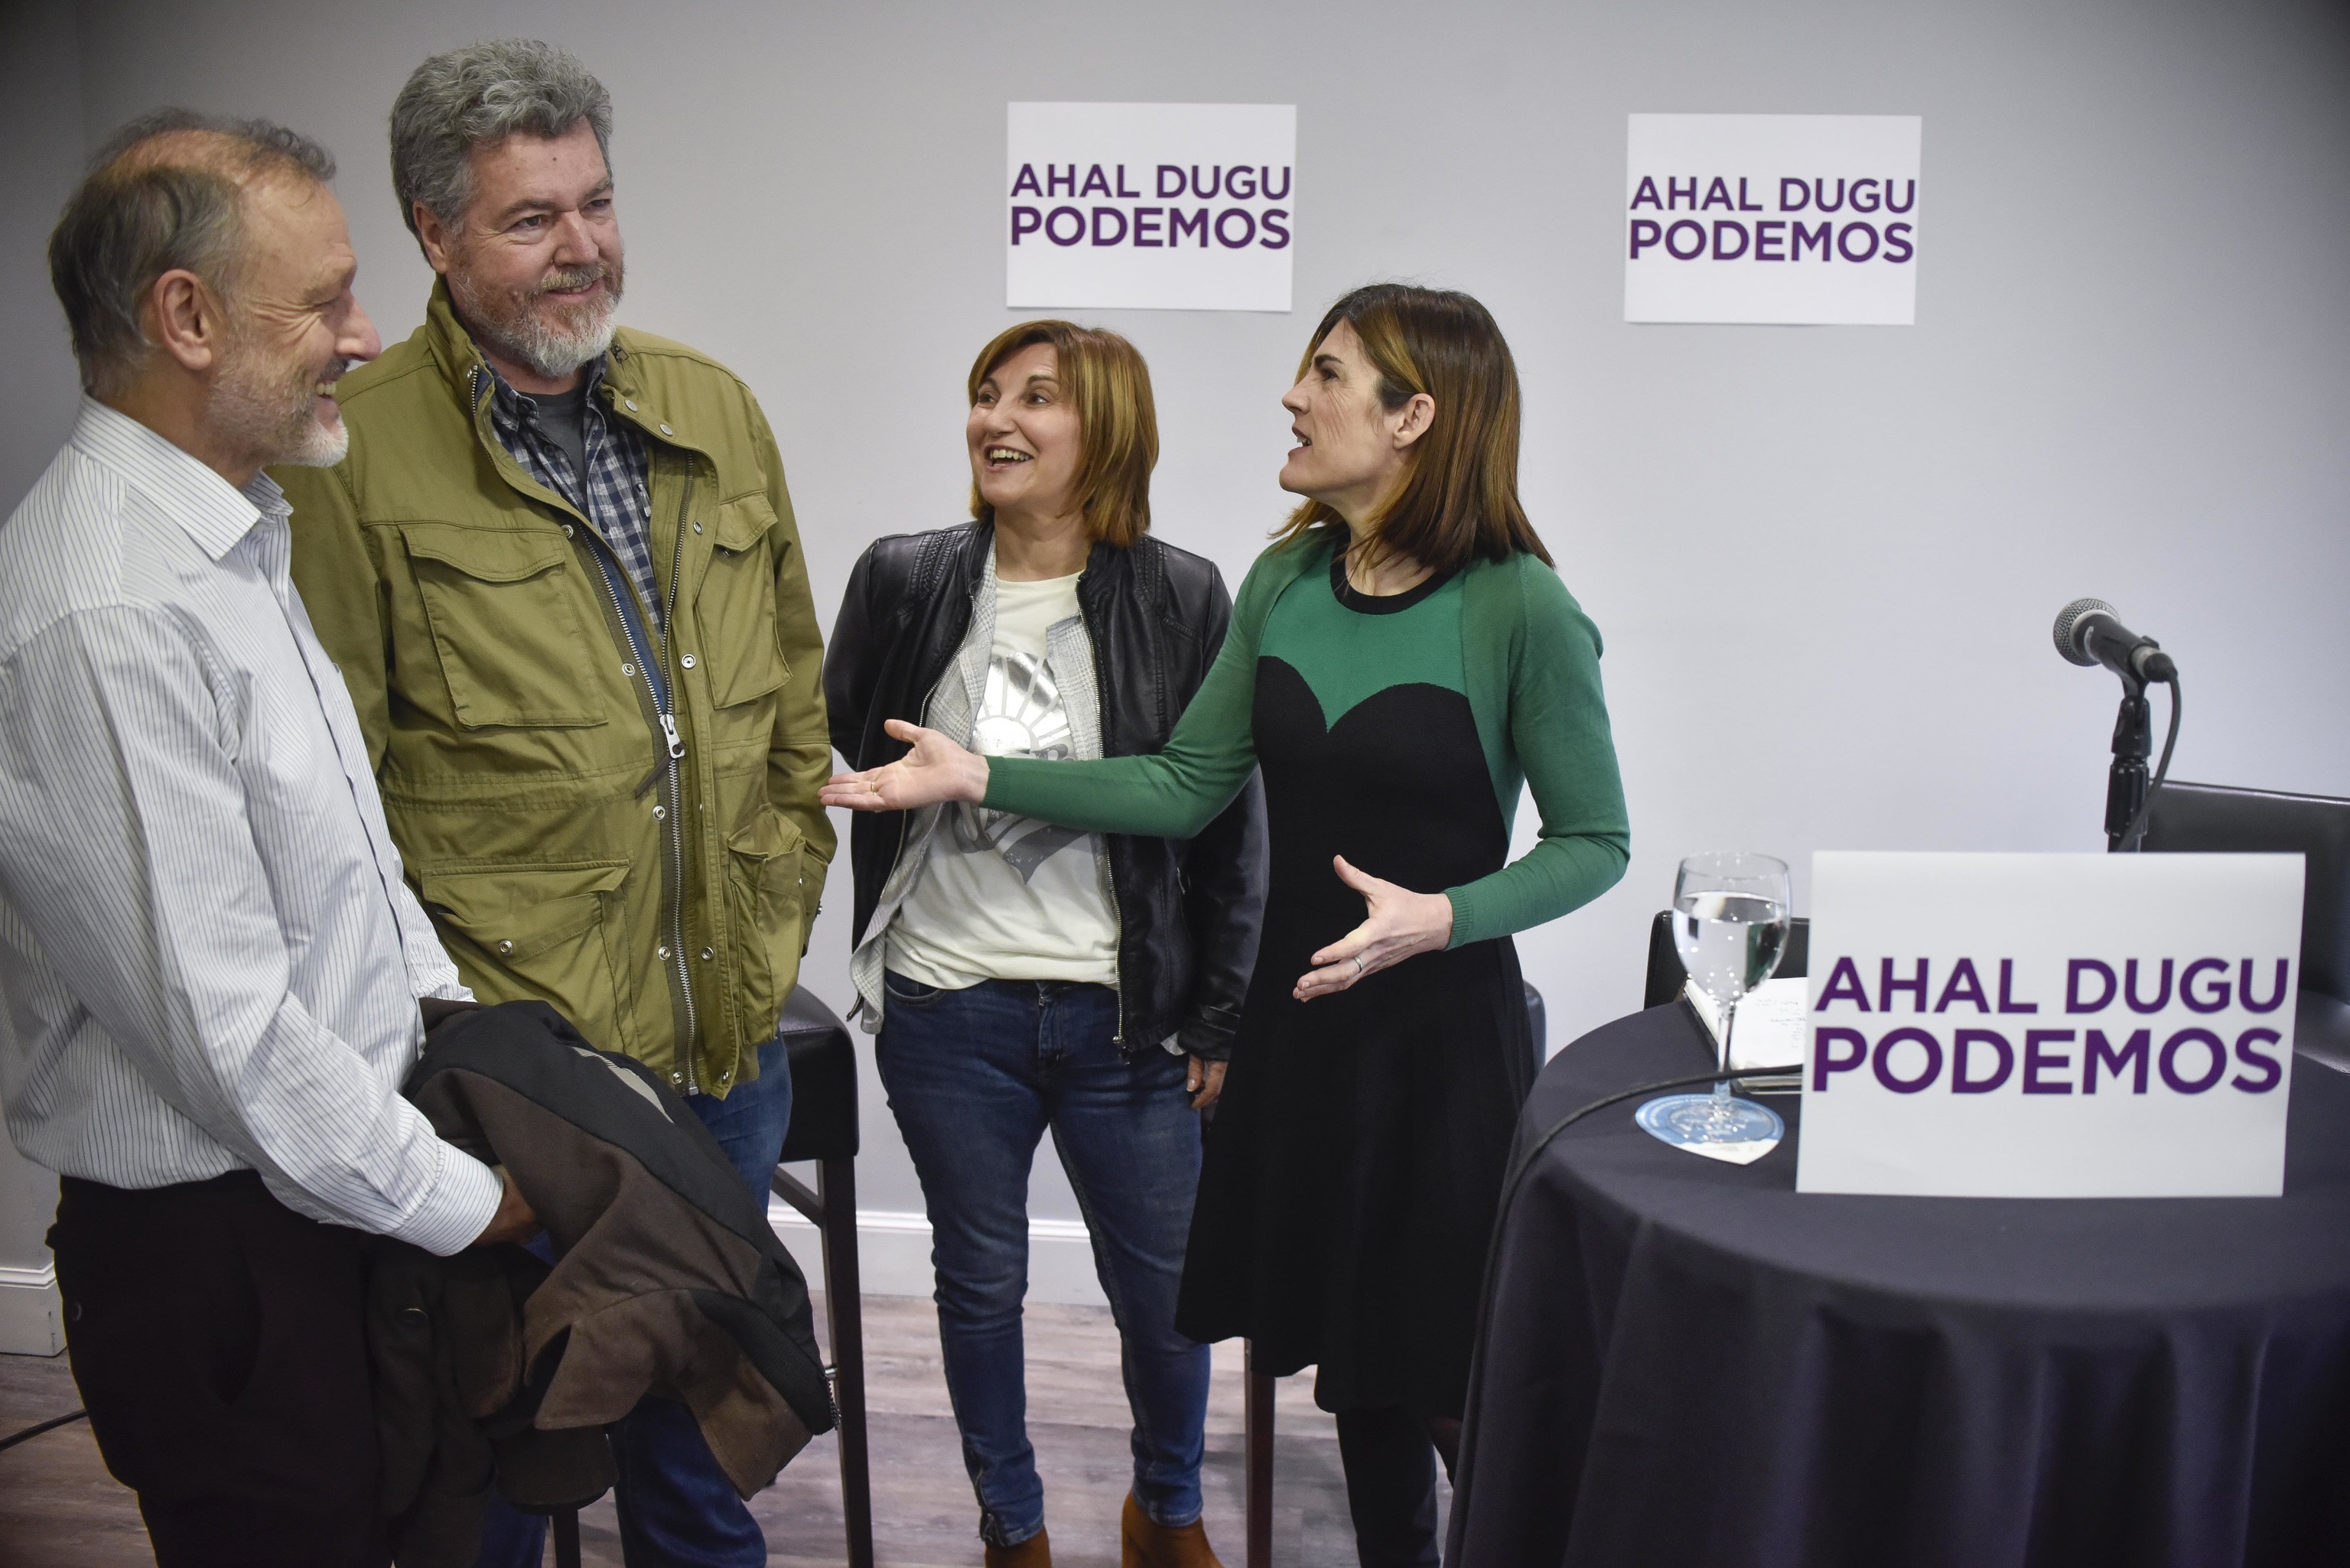 Roberto Uriarte, Juantxo Lpez de Uralde, Pilar Garrido y Miren Gorrotxategi conversan tras participar en un acto de Podemos en Bilbao.